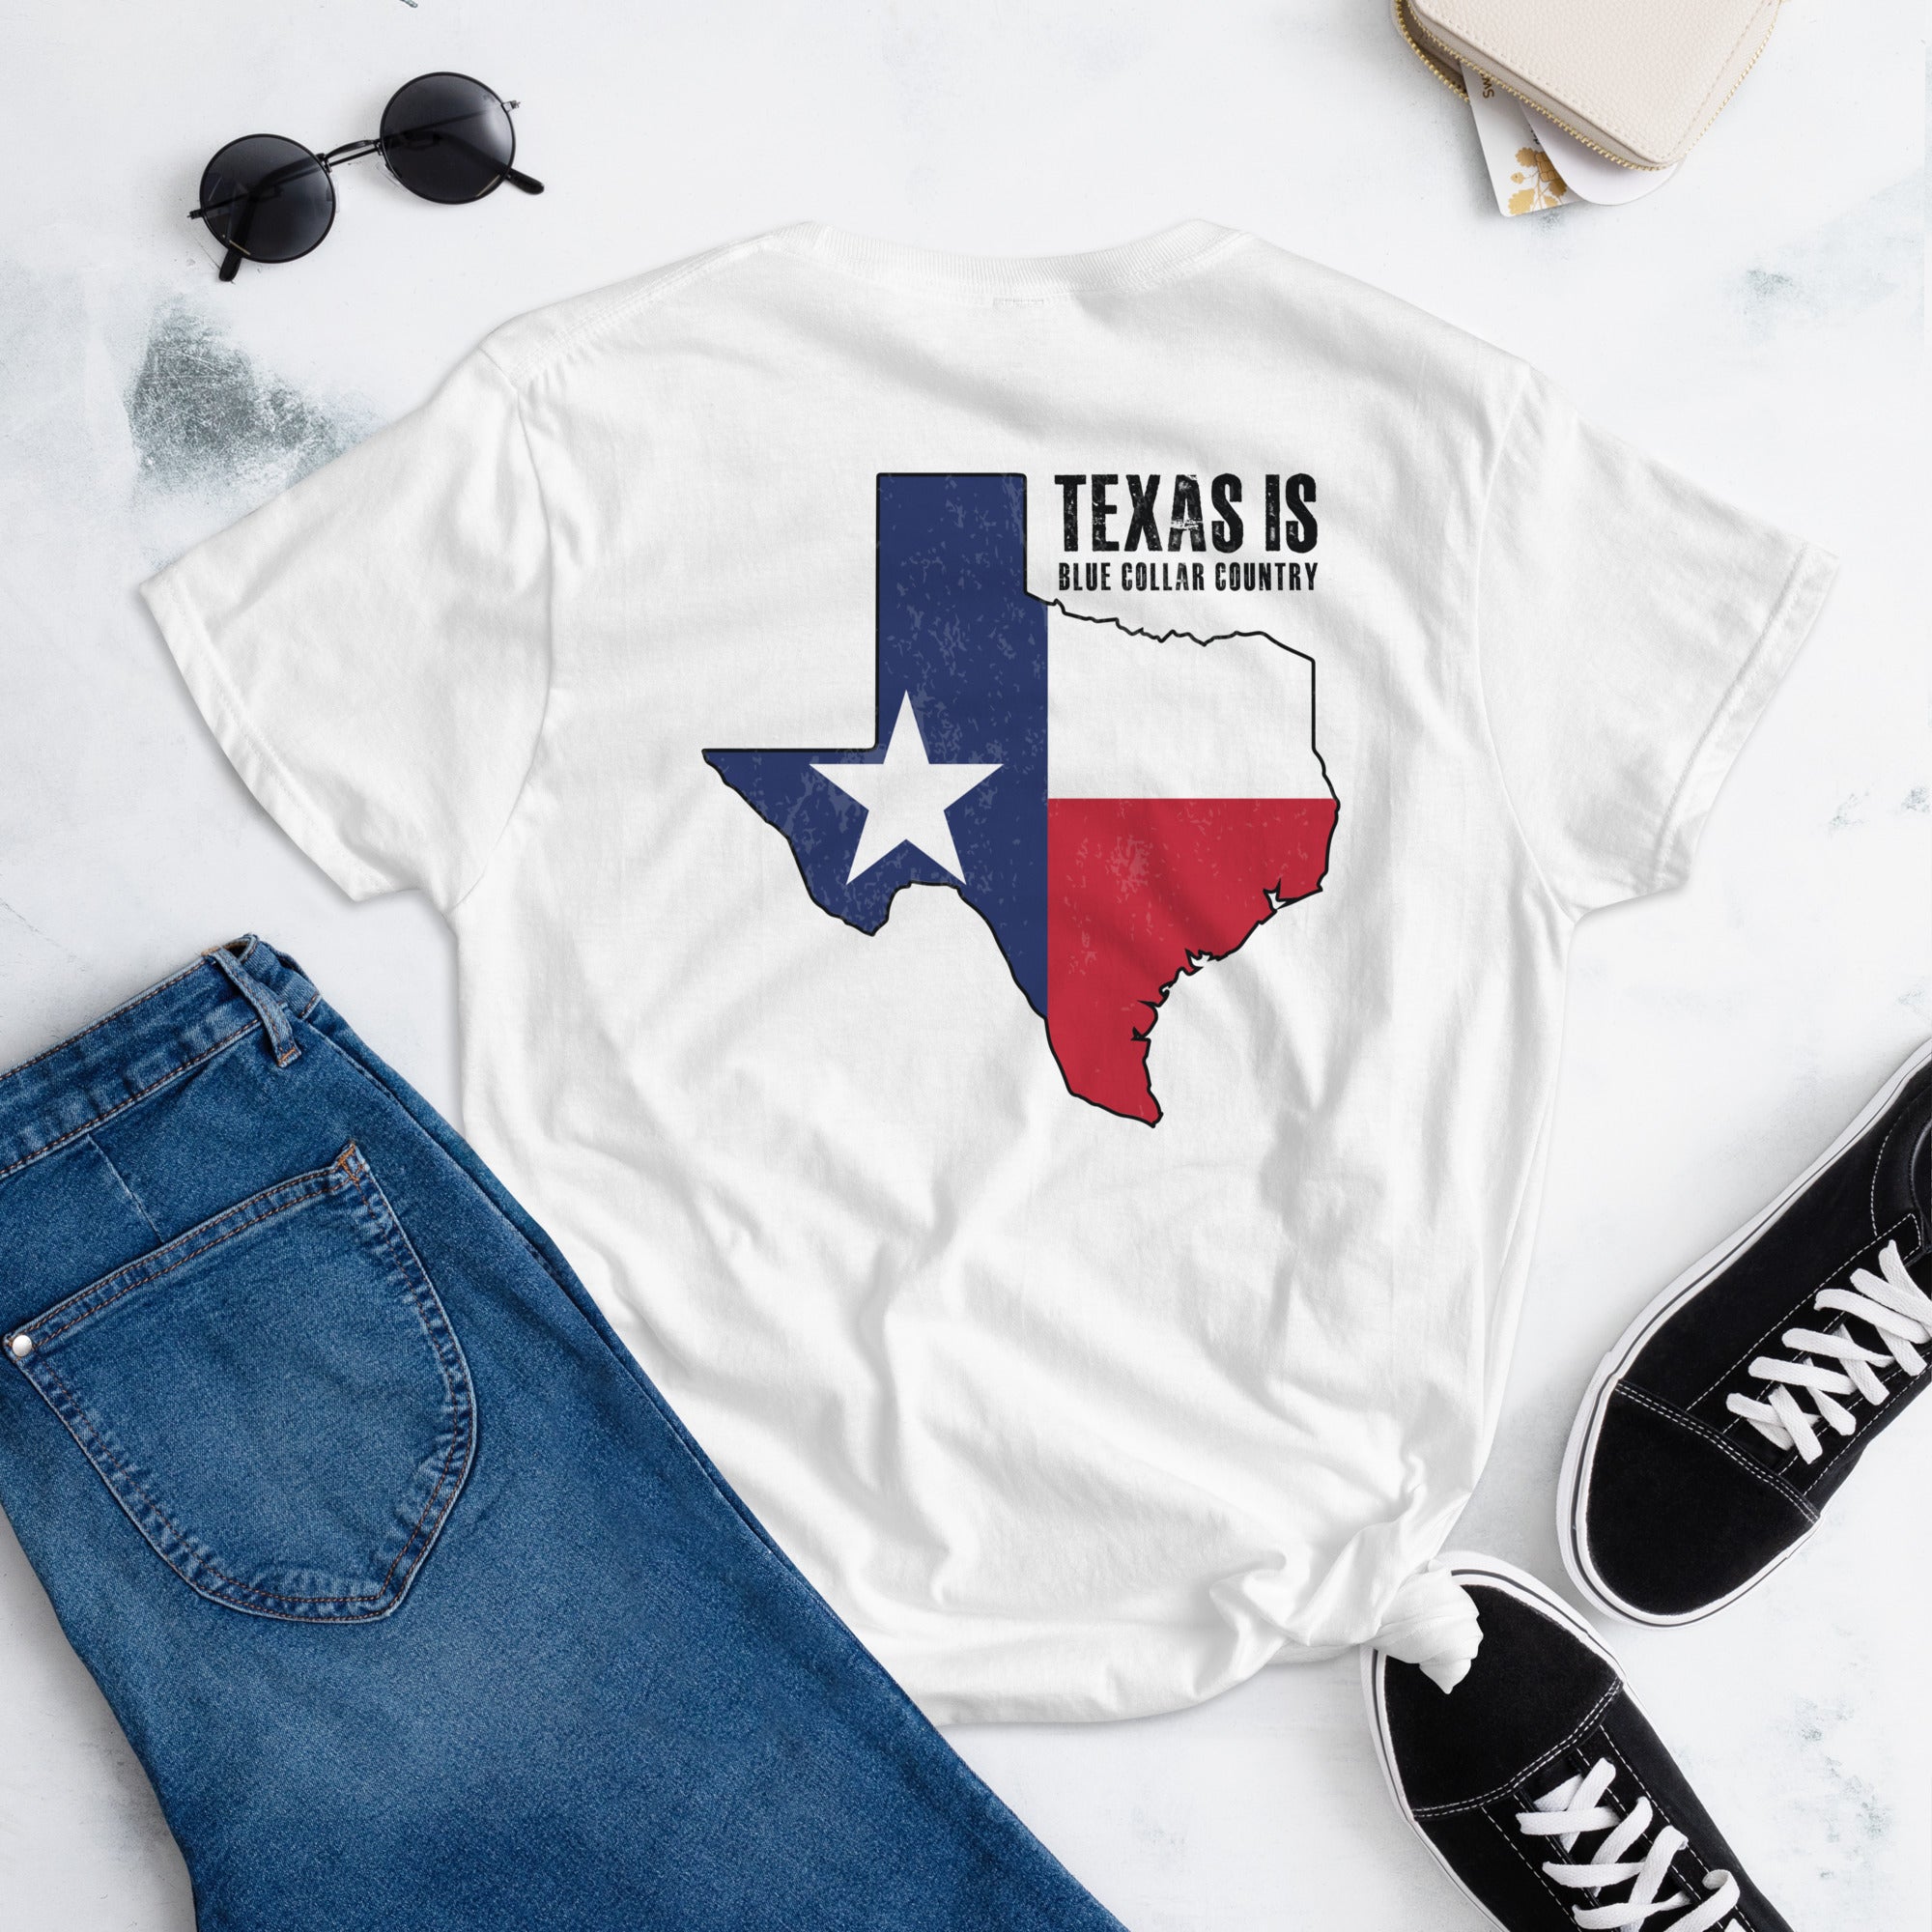 Texas is Blue Collar Country  I  Women's short sleeve t-shirt